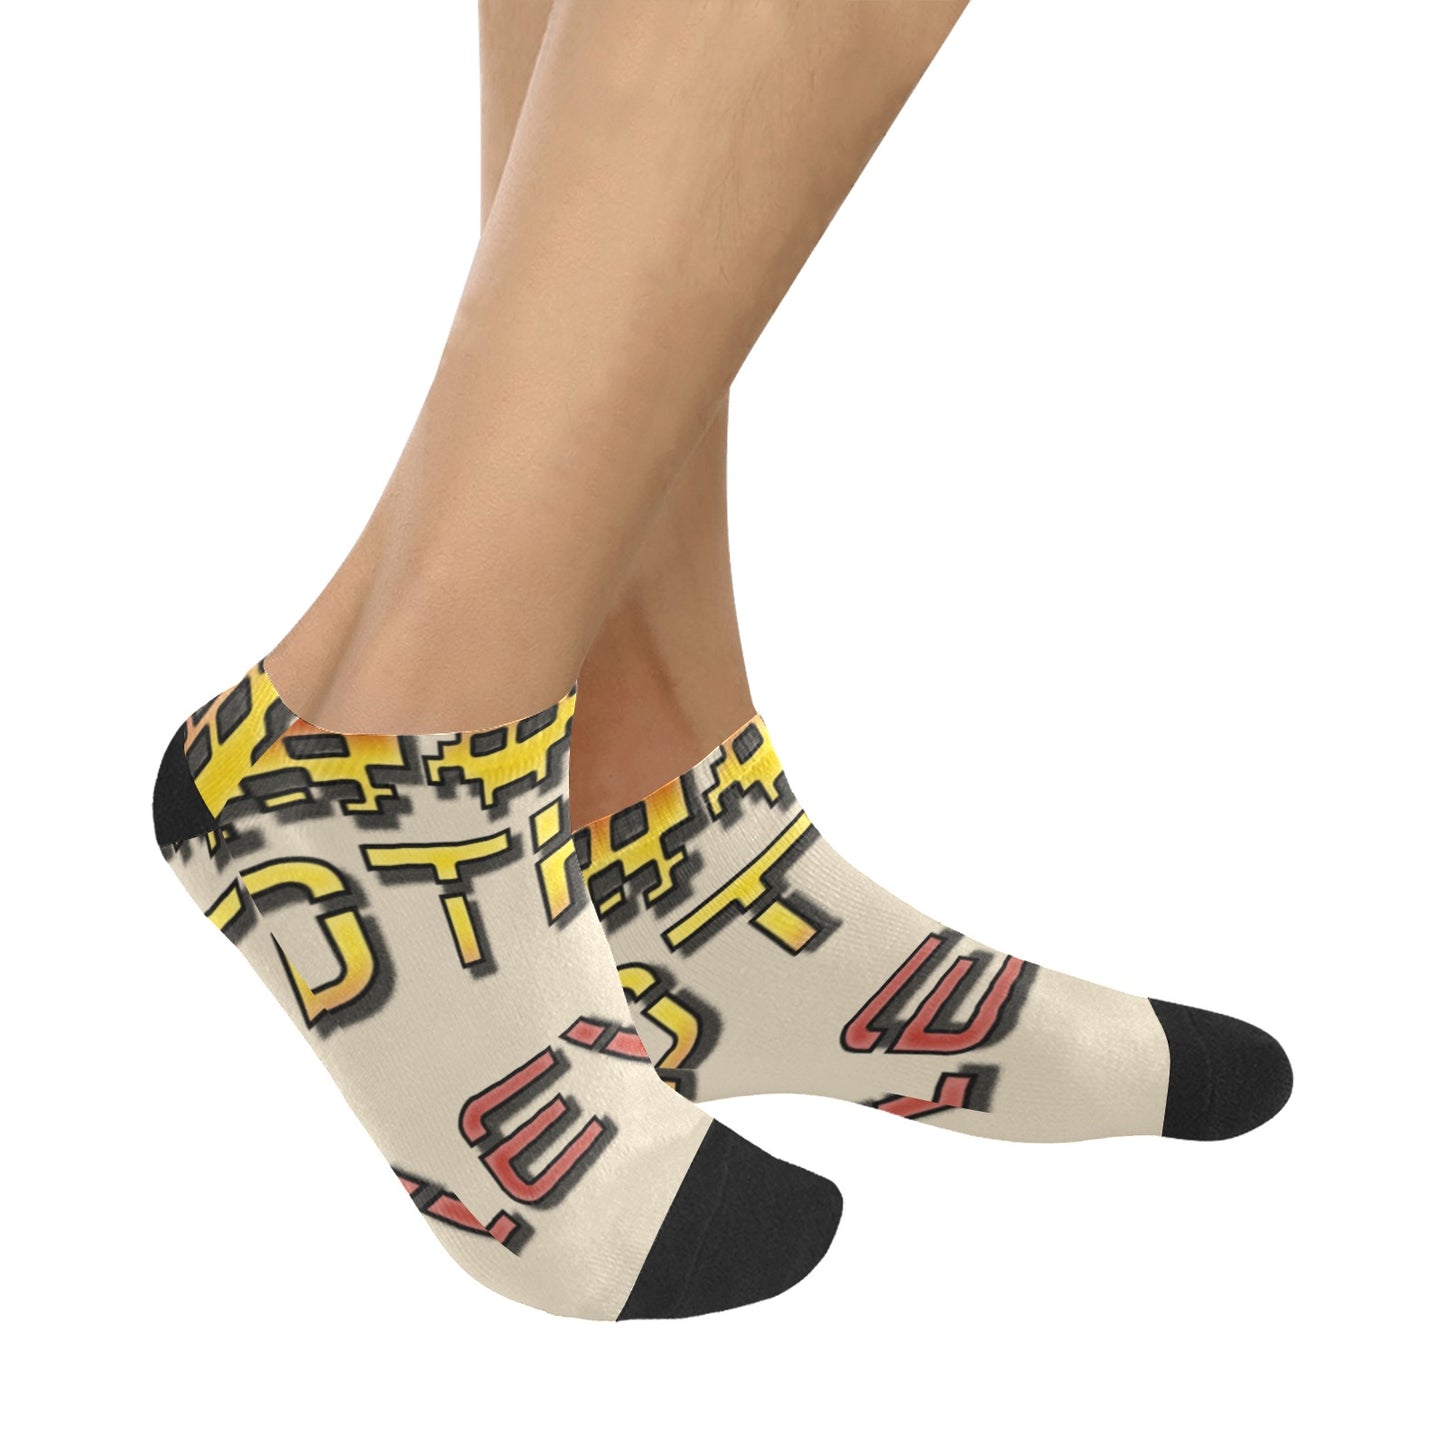 fz men's levels ankle socks one size / fz levels socks - creme men's ankle socks